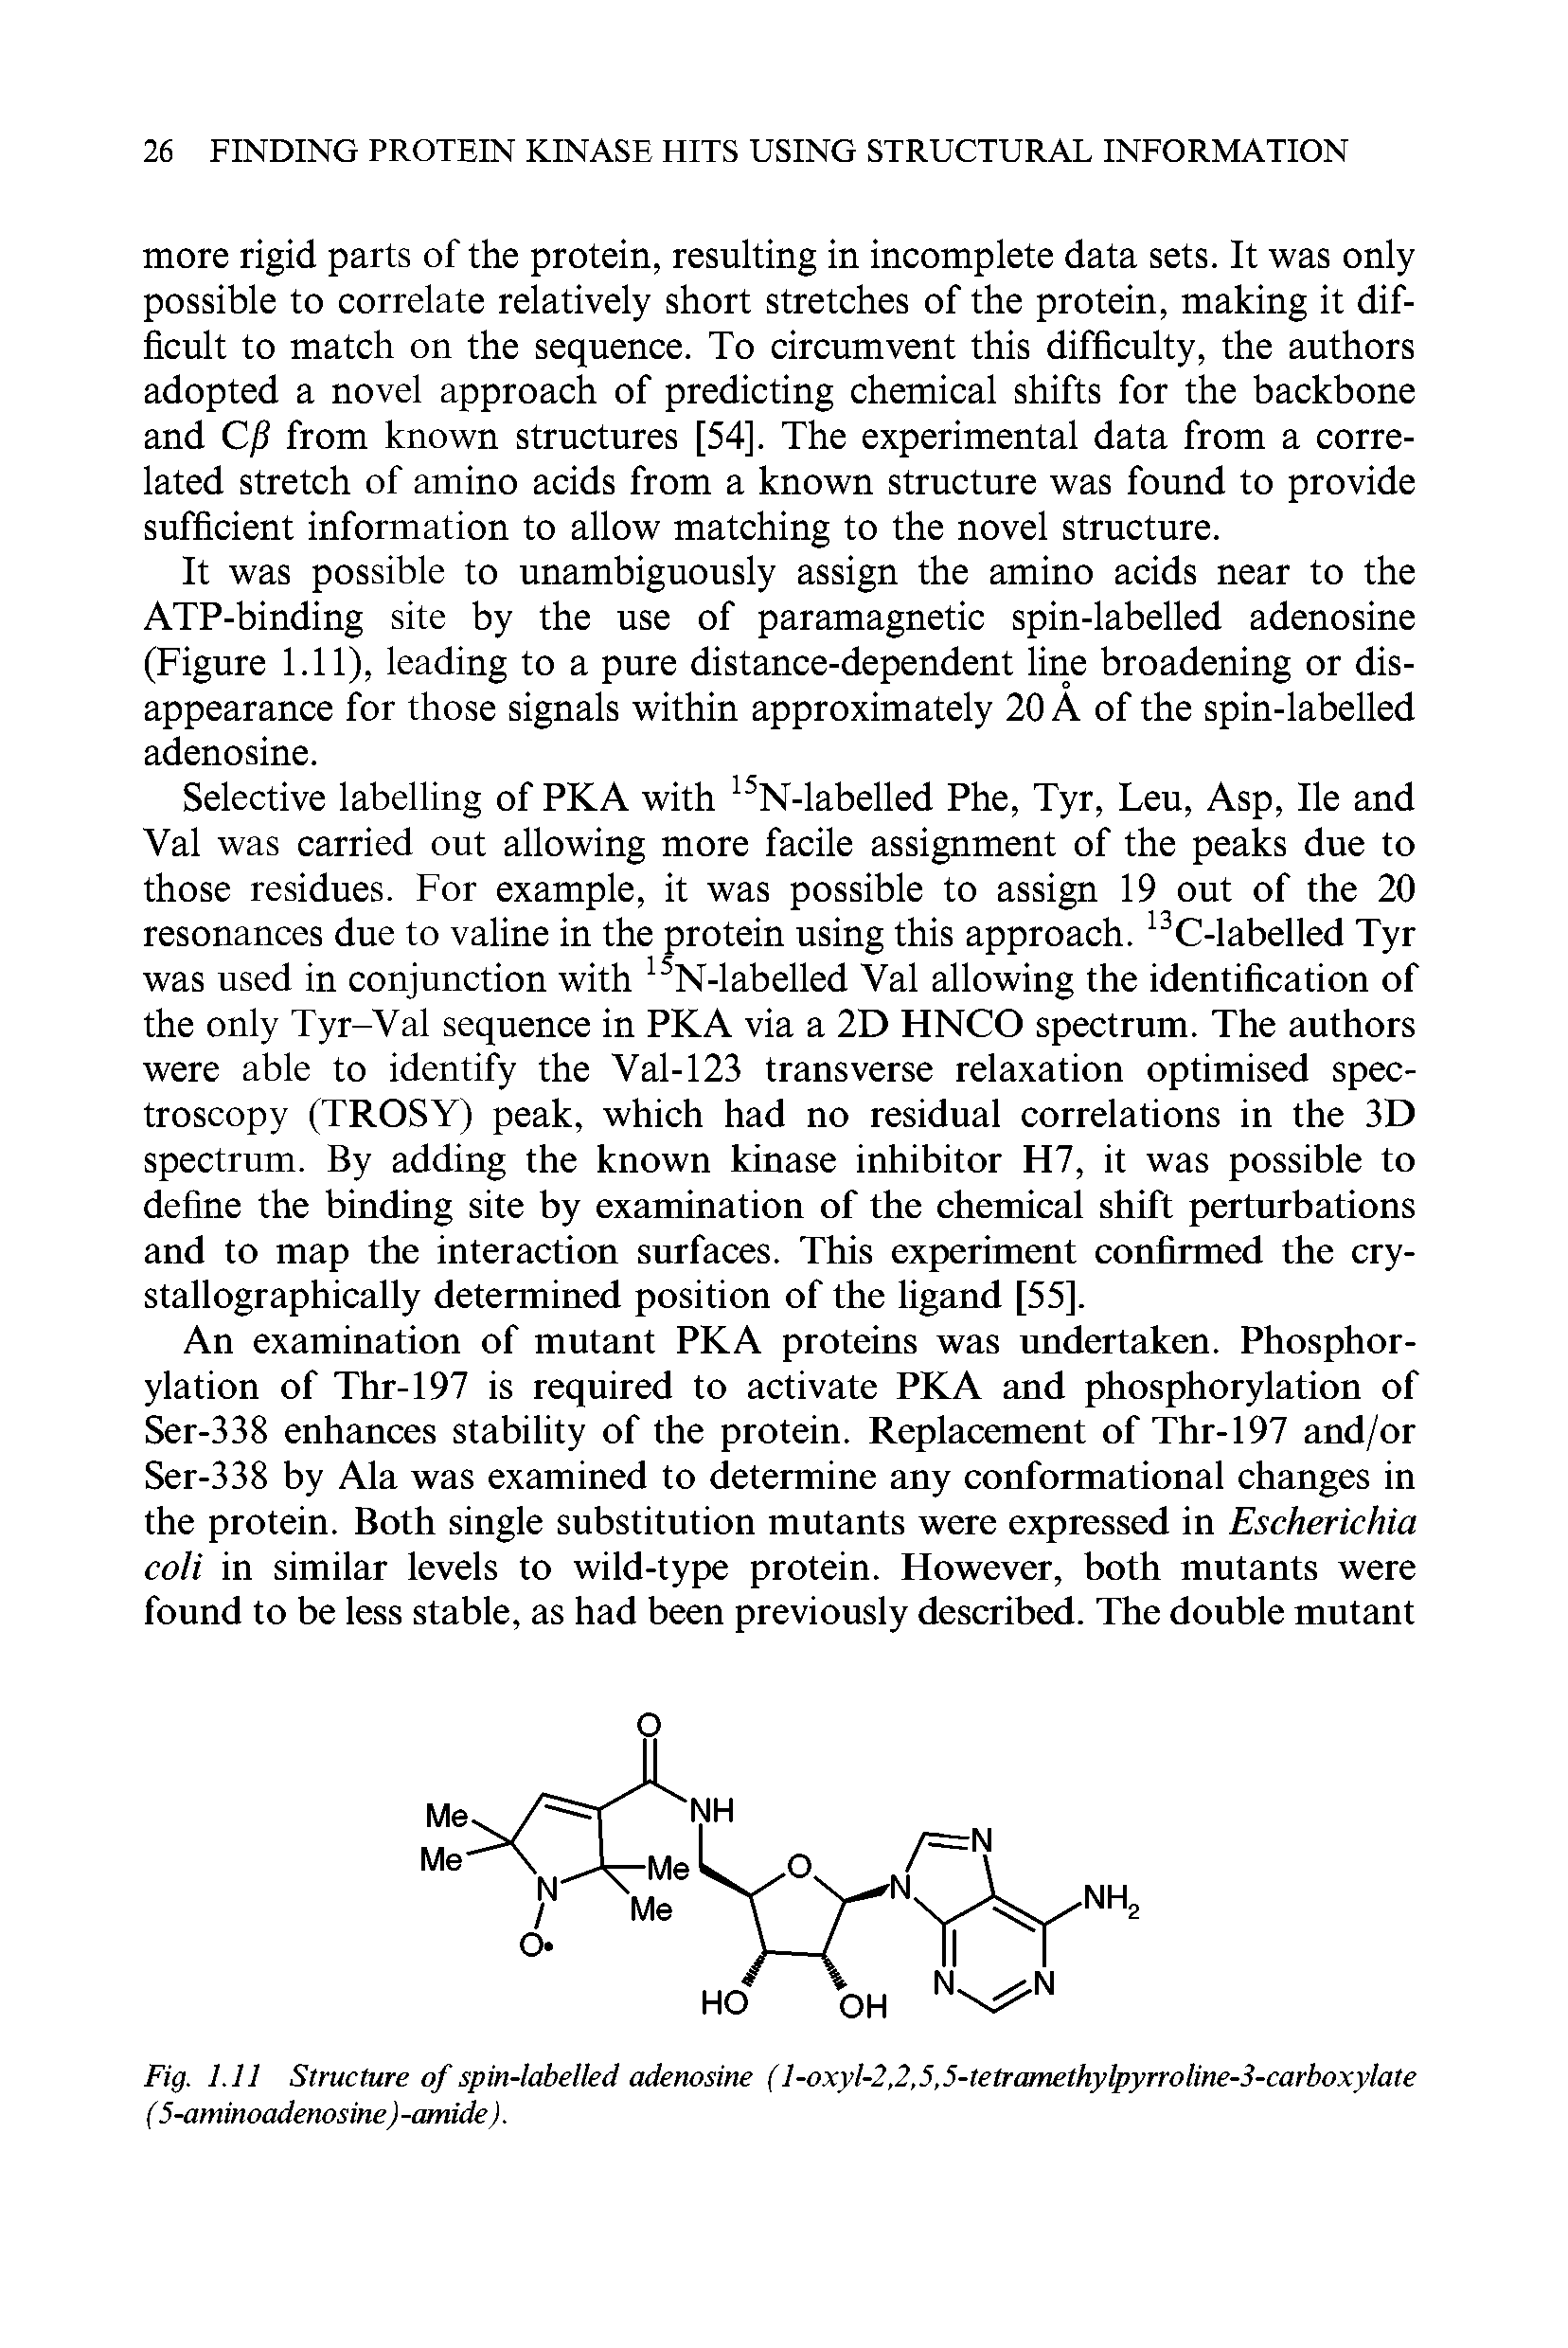 Fig. 1.11 Structure of spin-labelled adenosine (l-oxyl-2,2,5,5-tetramethylpyrroline-3-carboxylate (5-aminoadenosine) -amide).